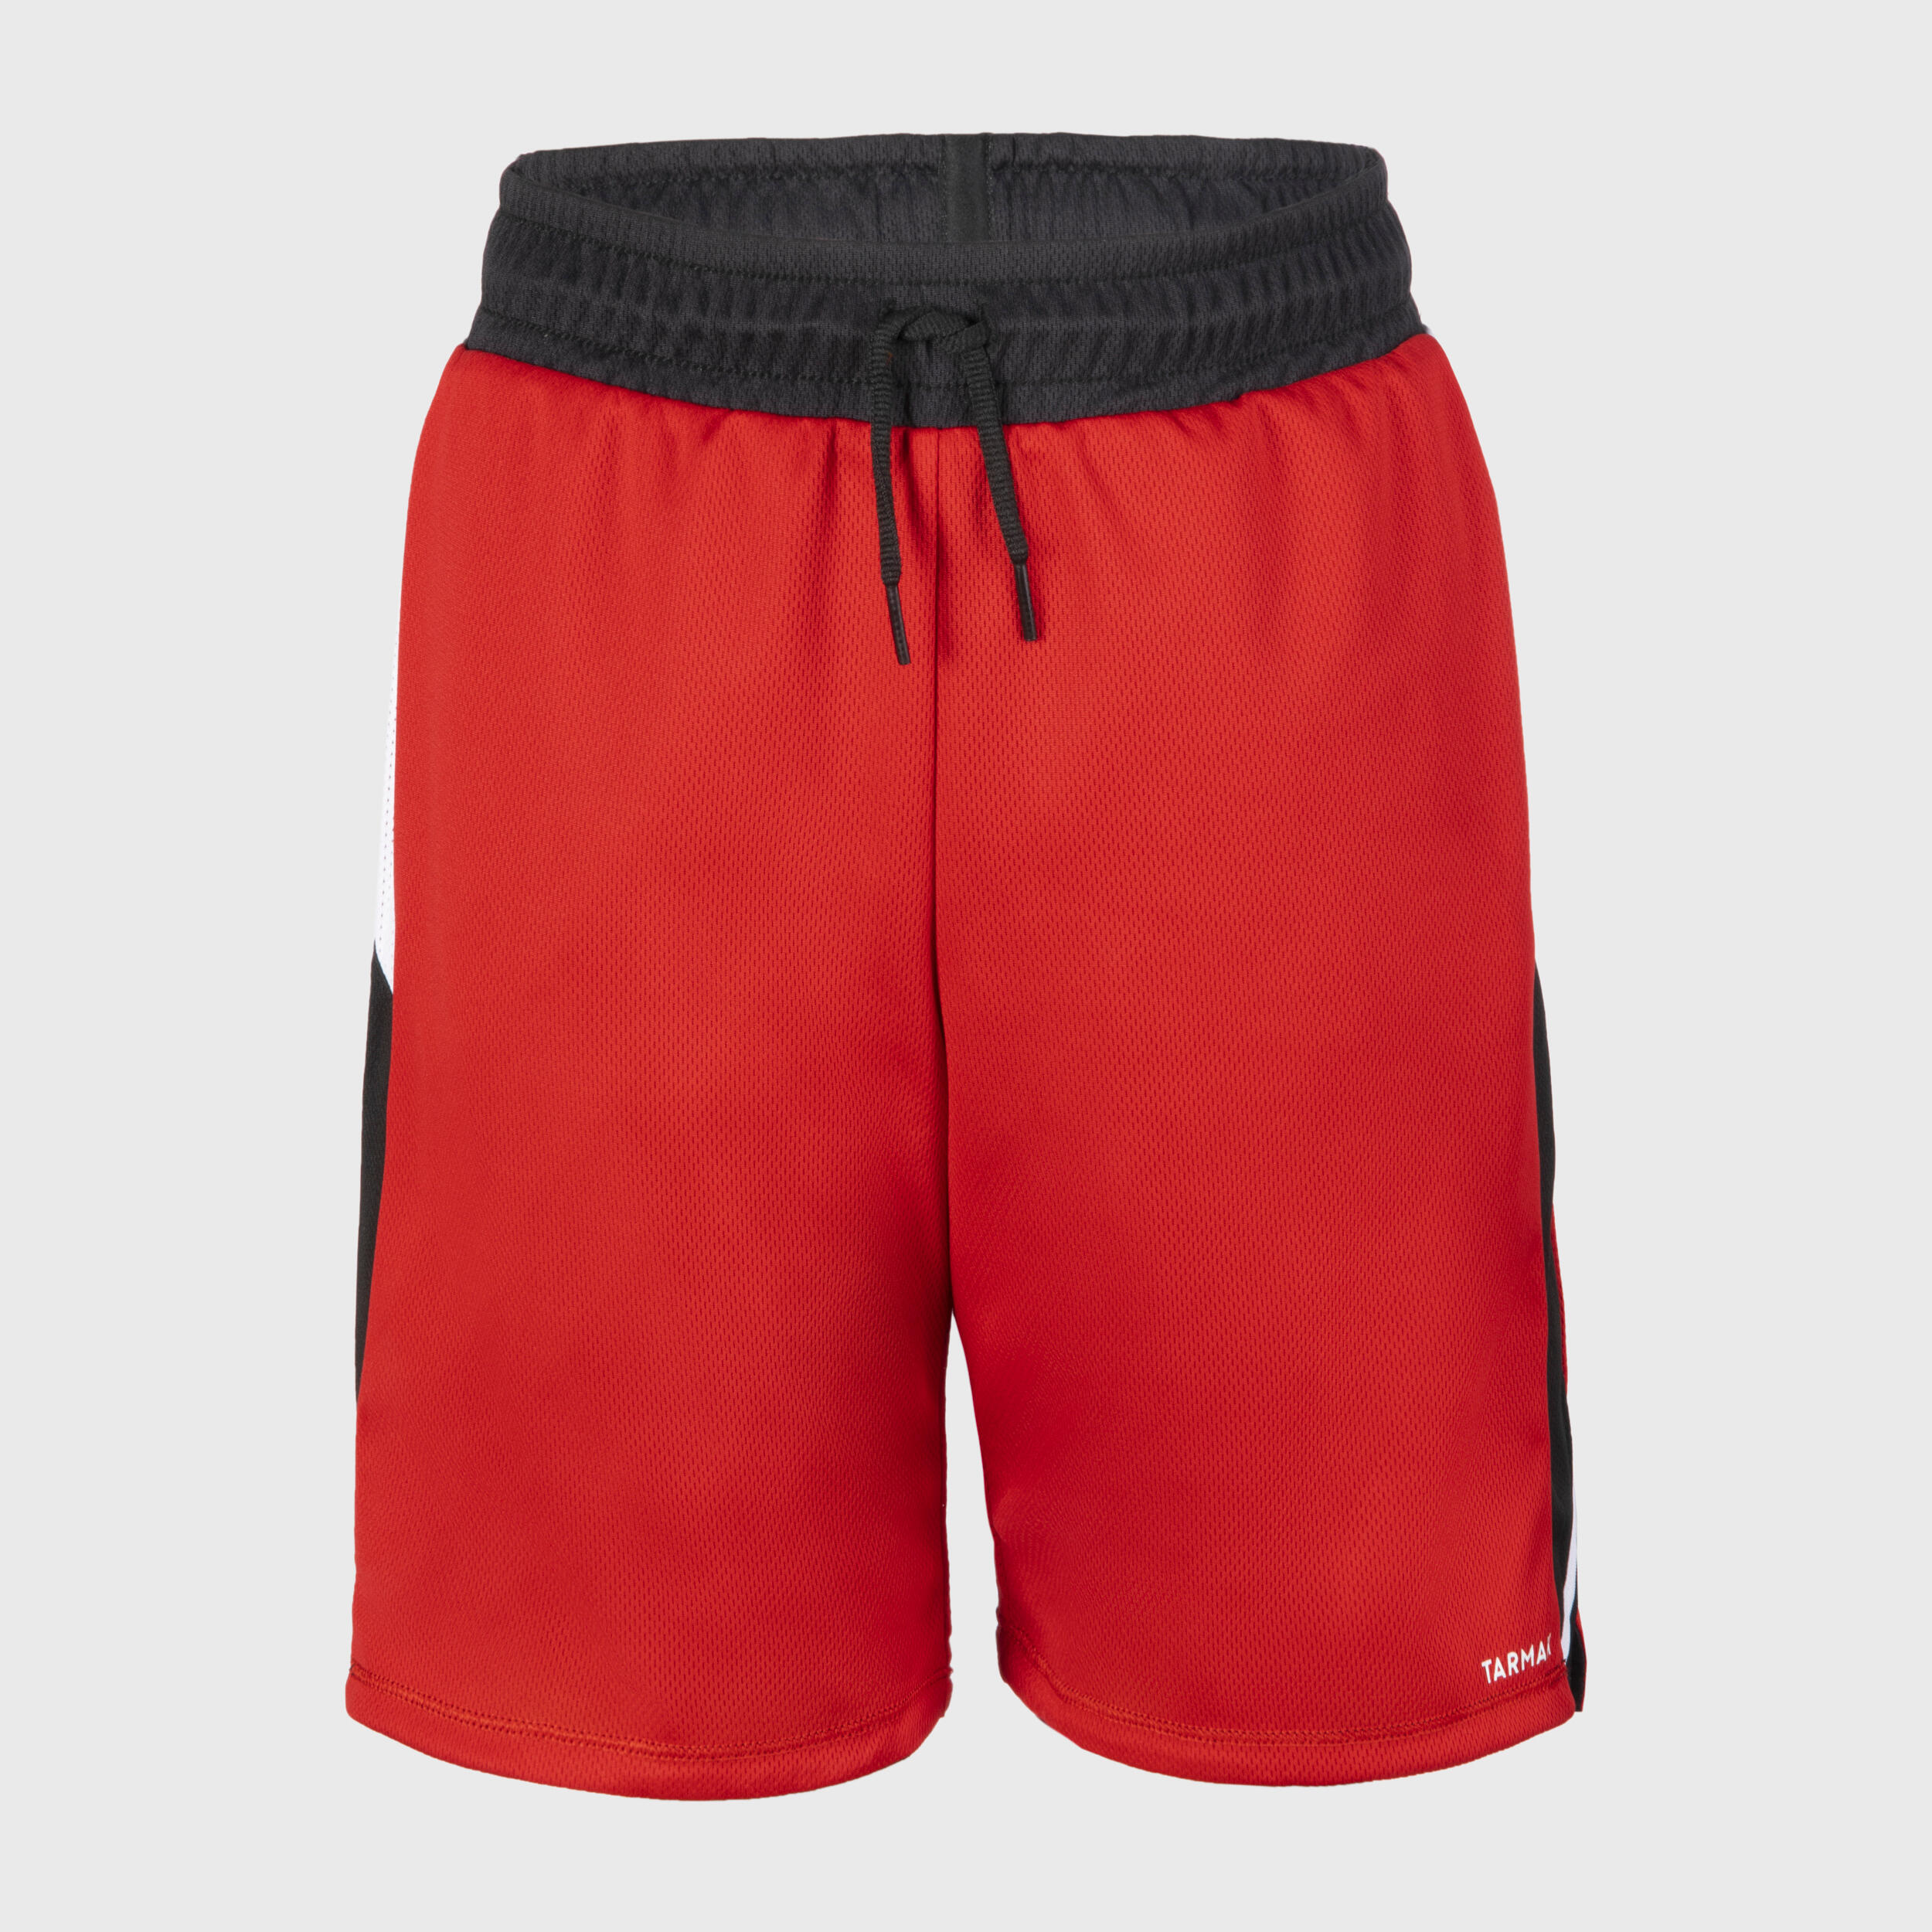 Kids' Reversible Basketball Shorts SH500R - Black/Red 6/11